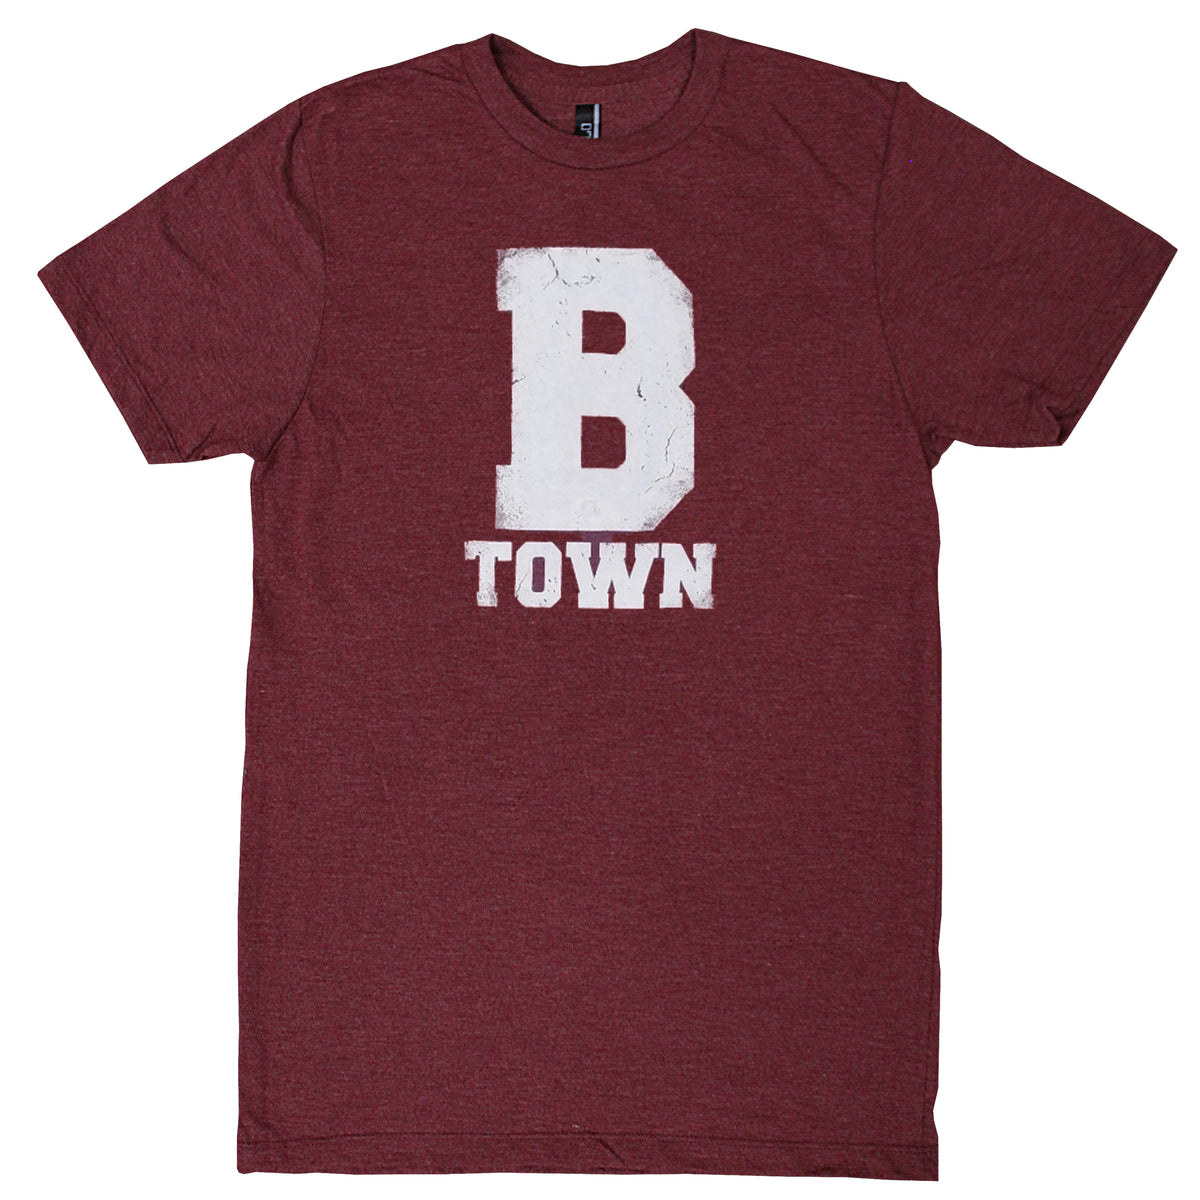 Benton B Town Tee